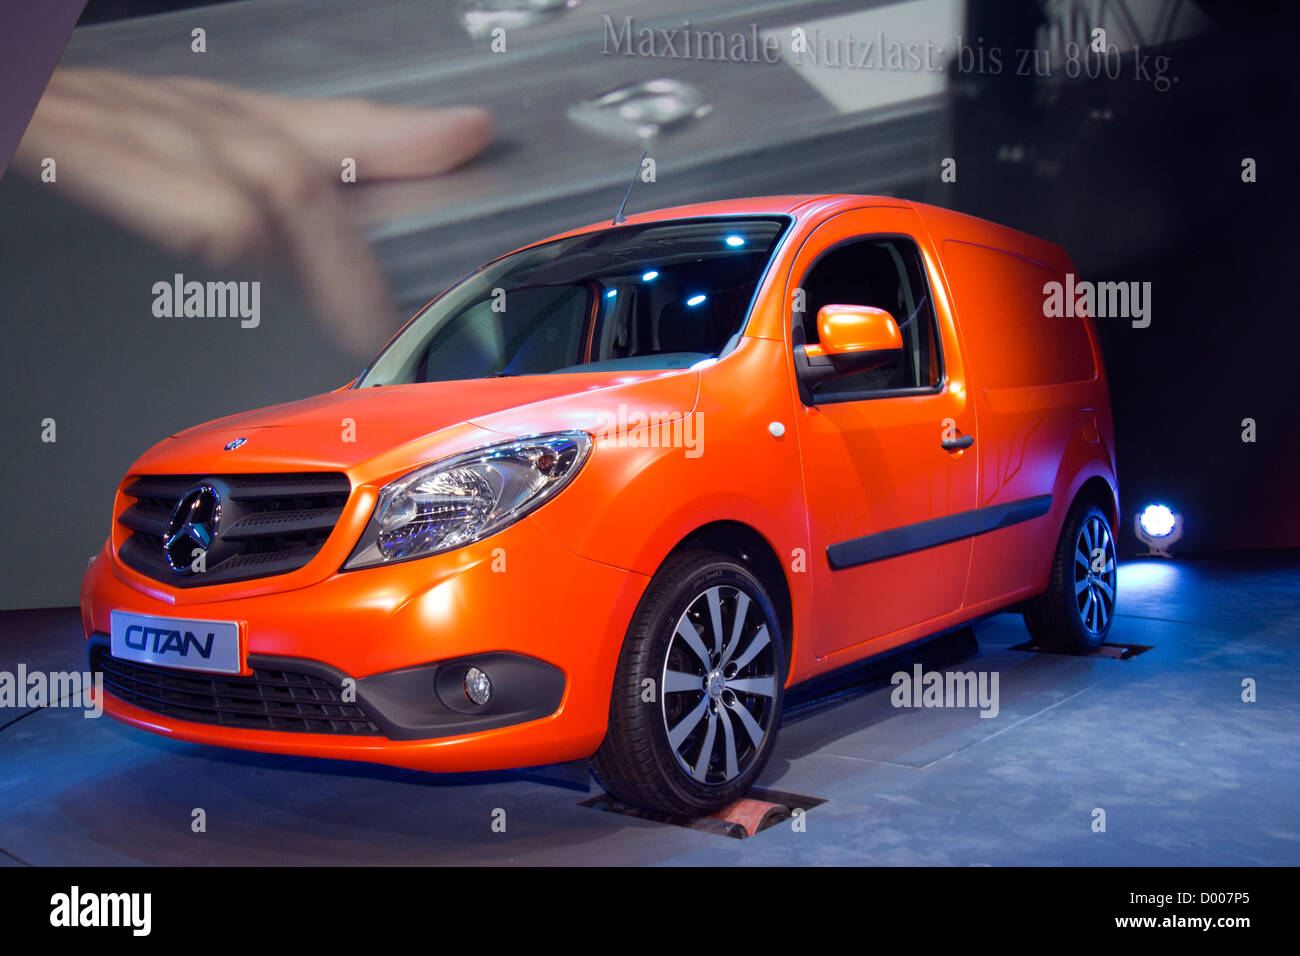 Mercedes benz van hi-res stock photography and images - Alamy